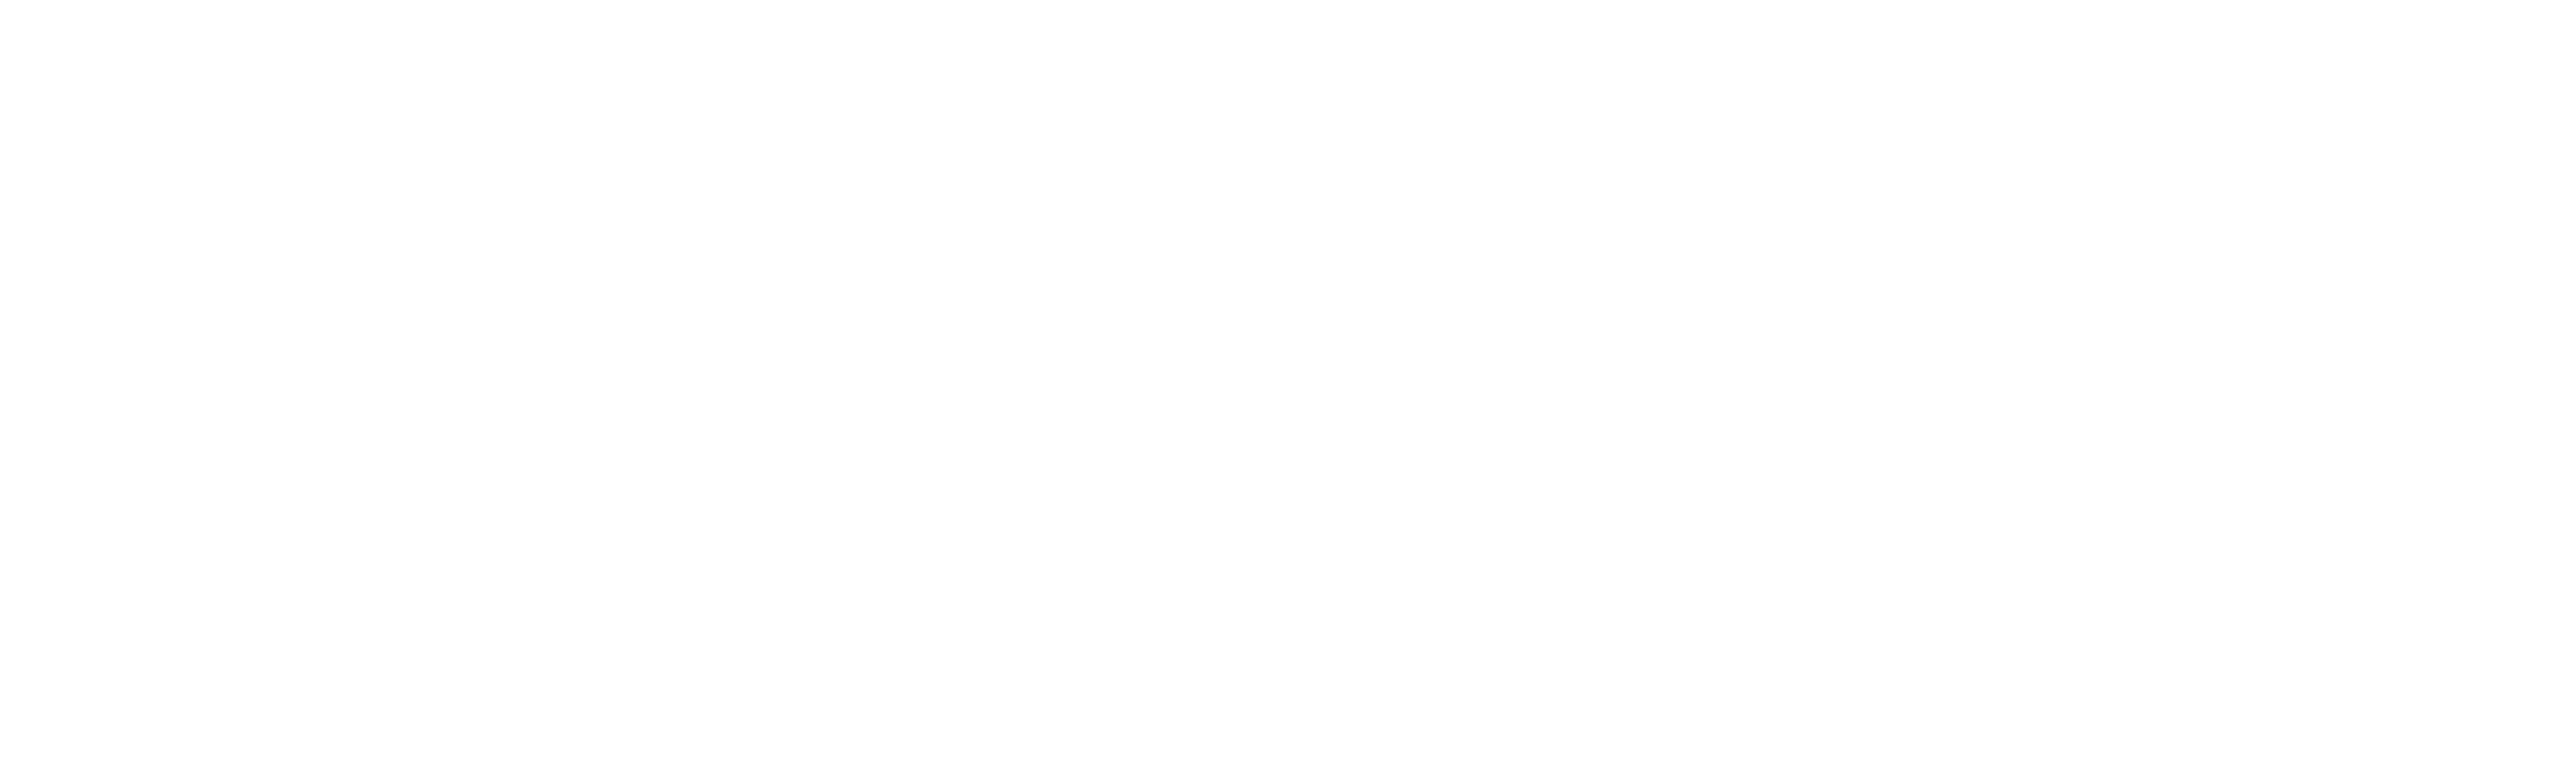 Argento Wellness & Aesthetics